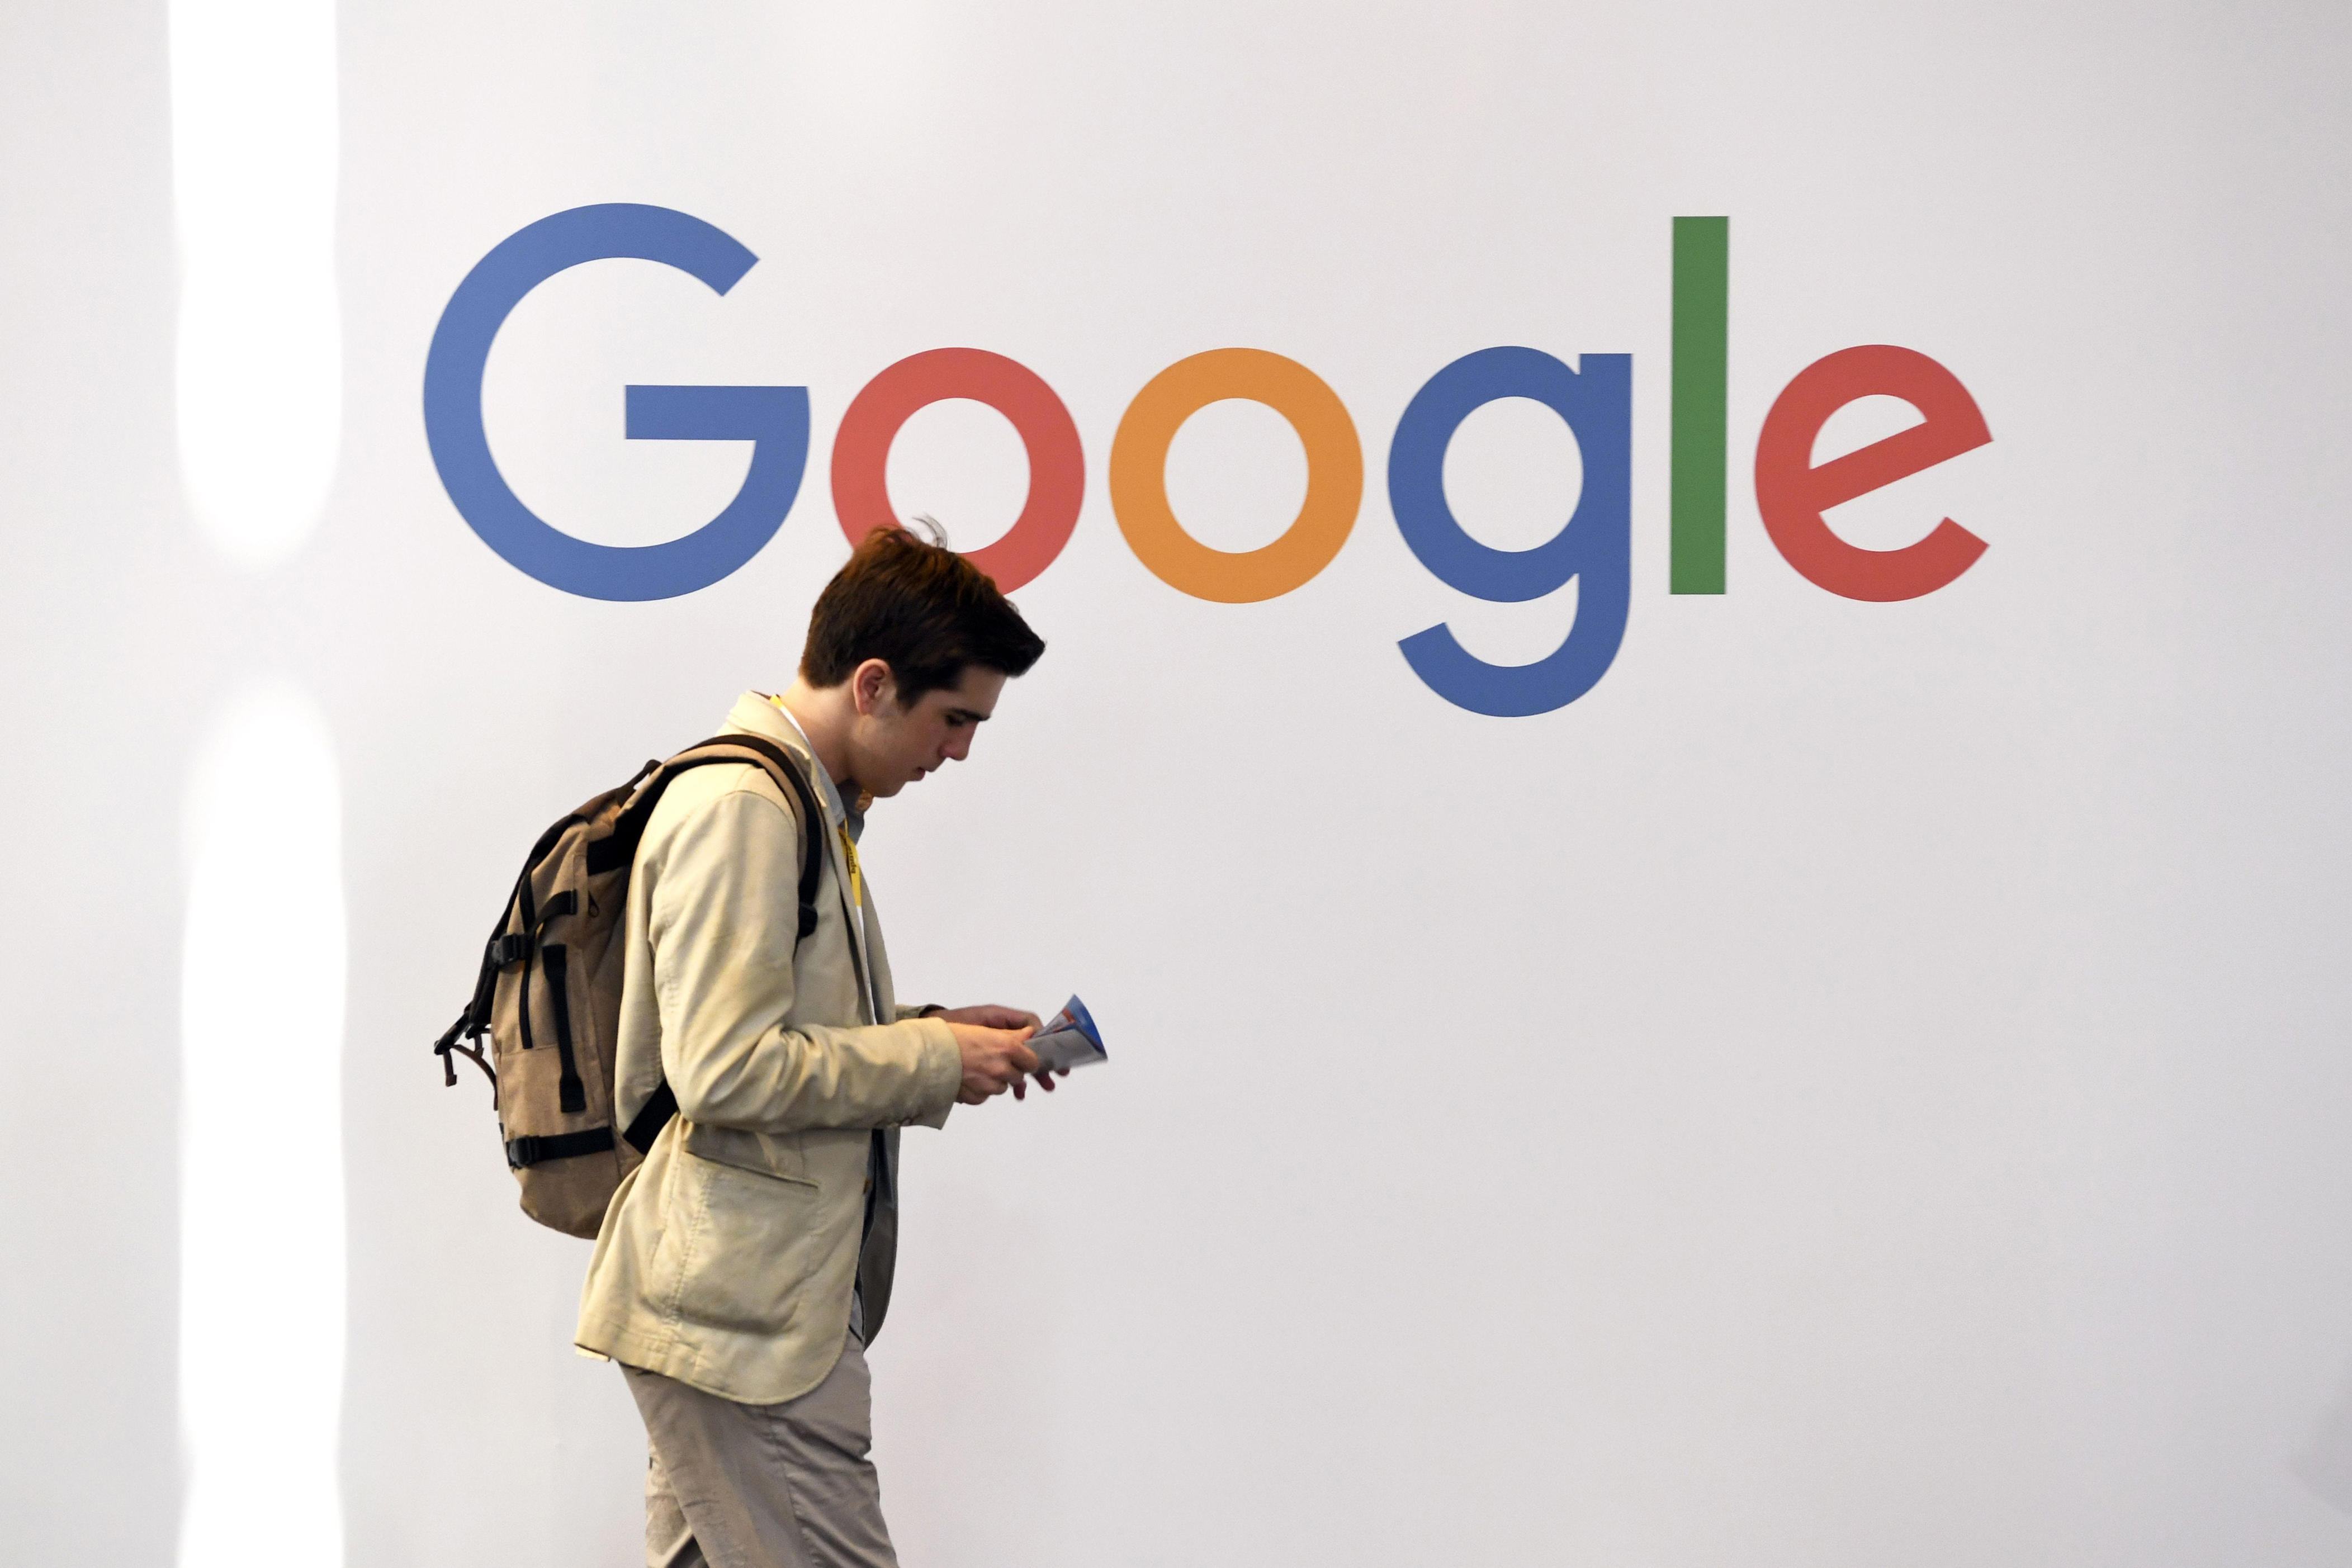 microsoft, google hits a new milestone: $2 trillion